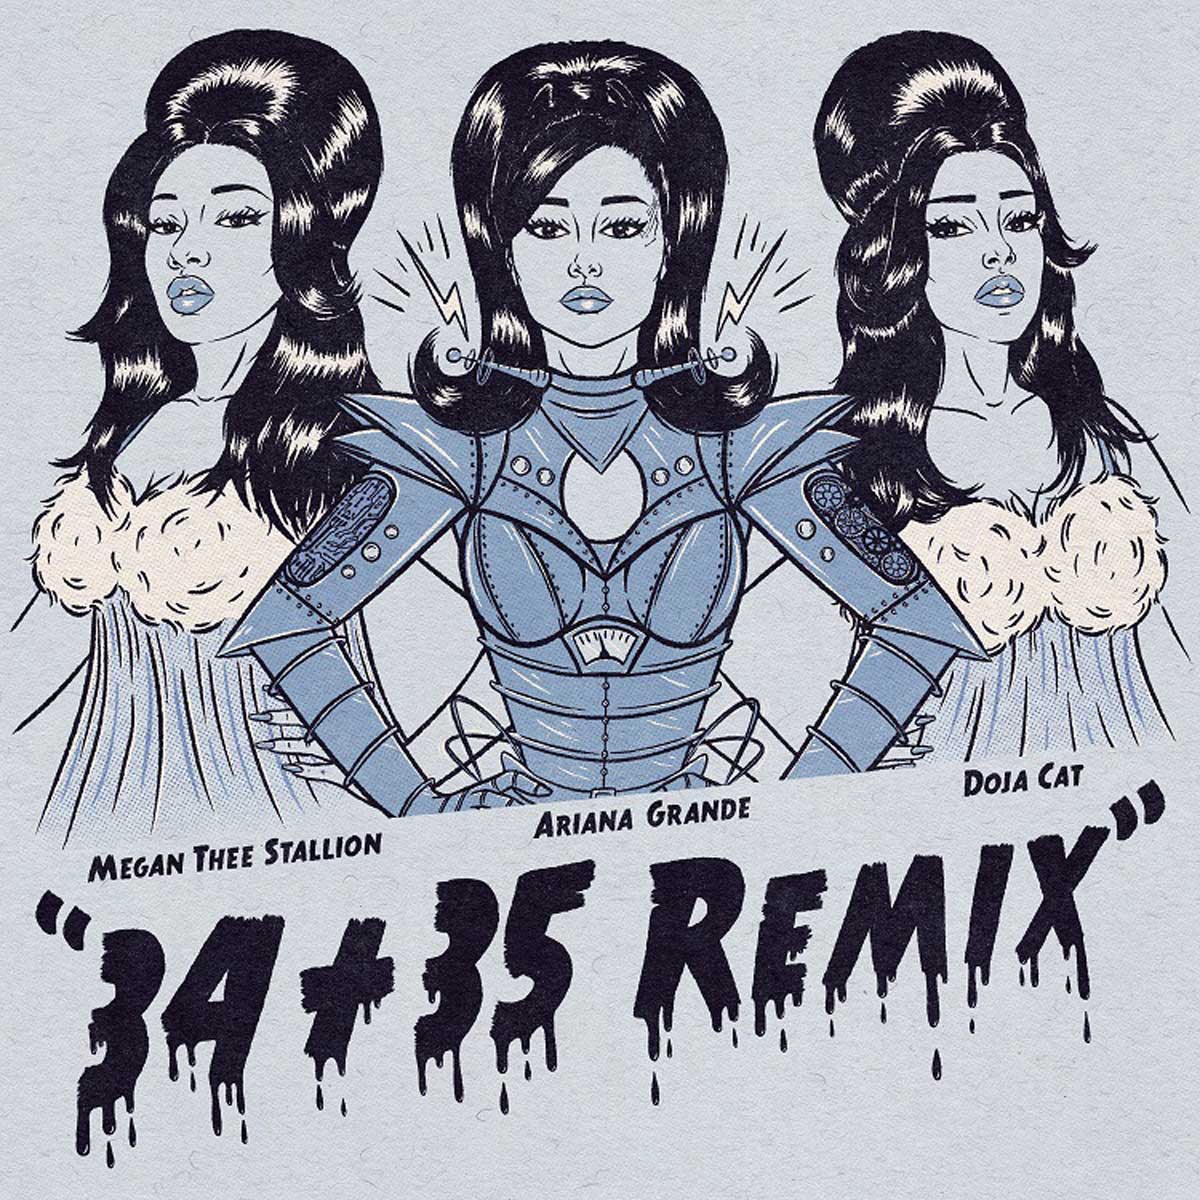 「34+35 Remix」